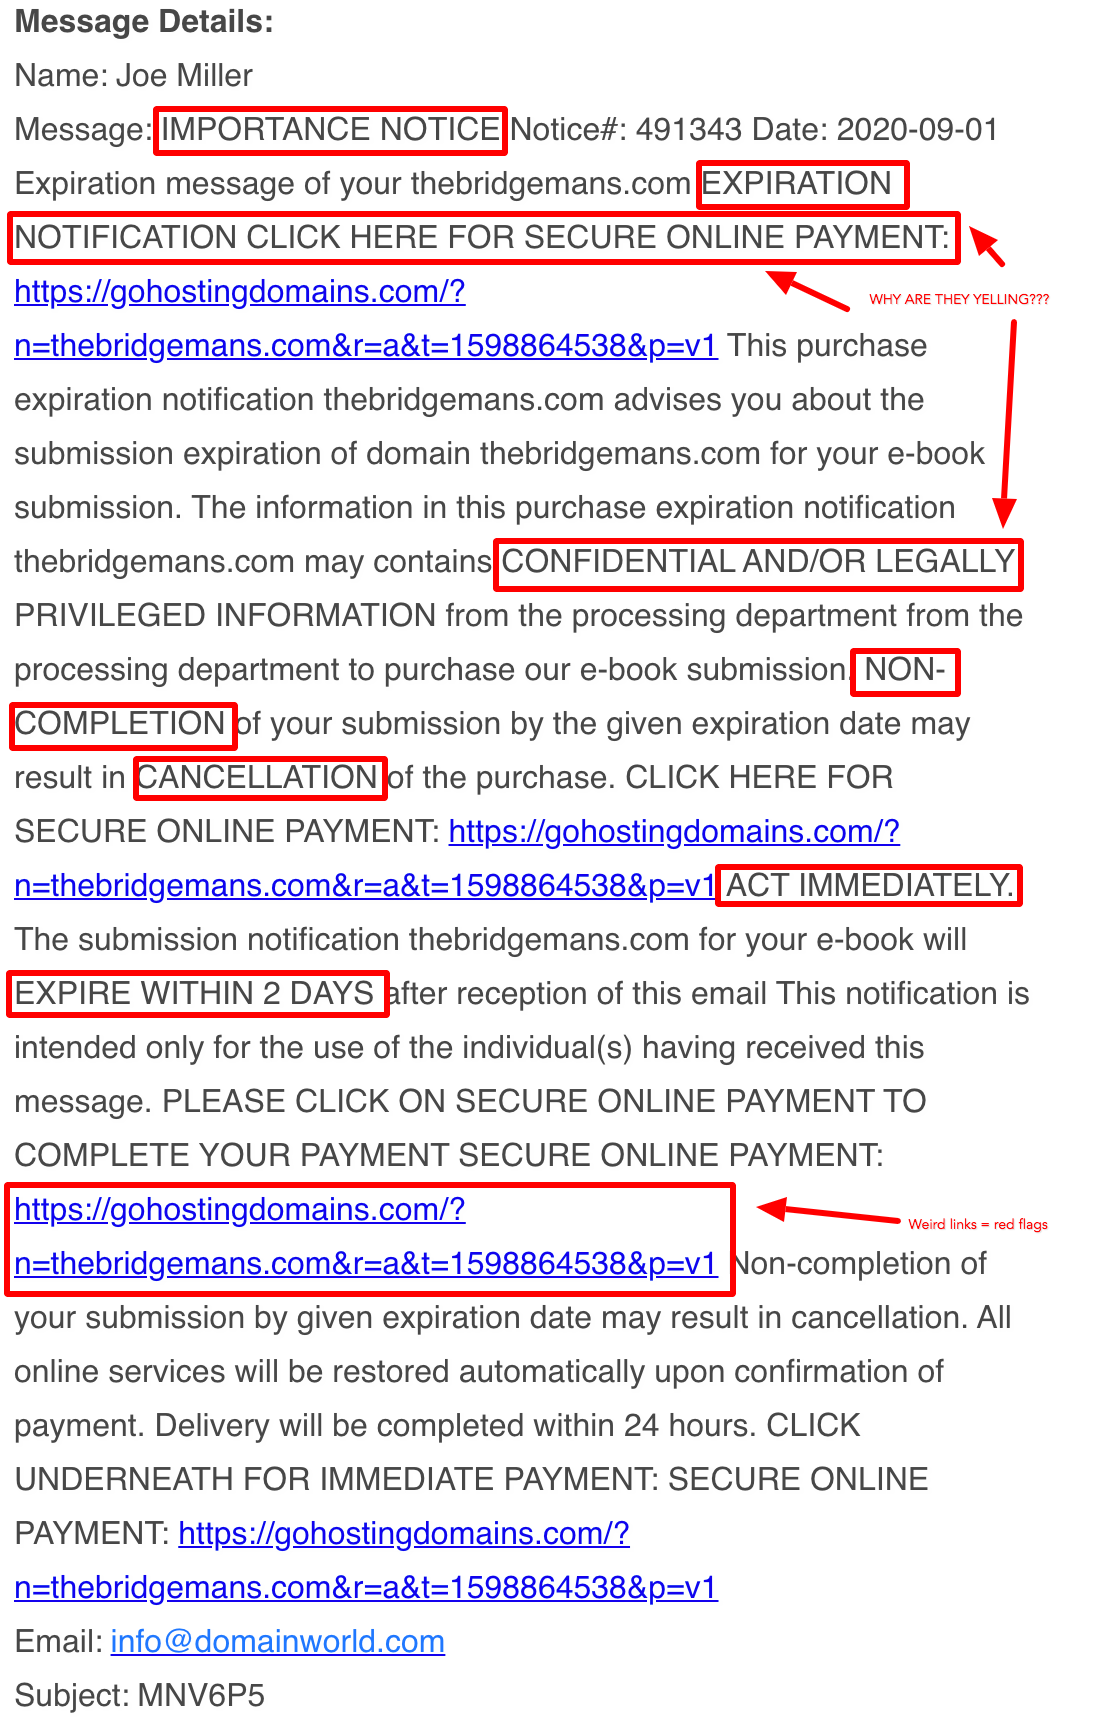 spam domain expiration